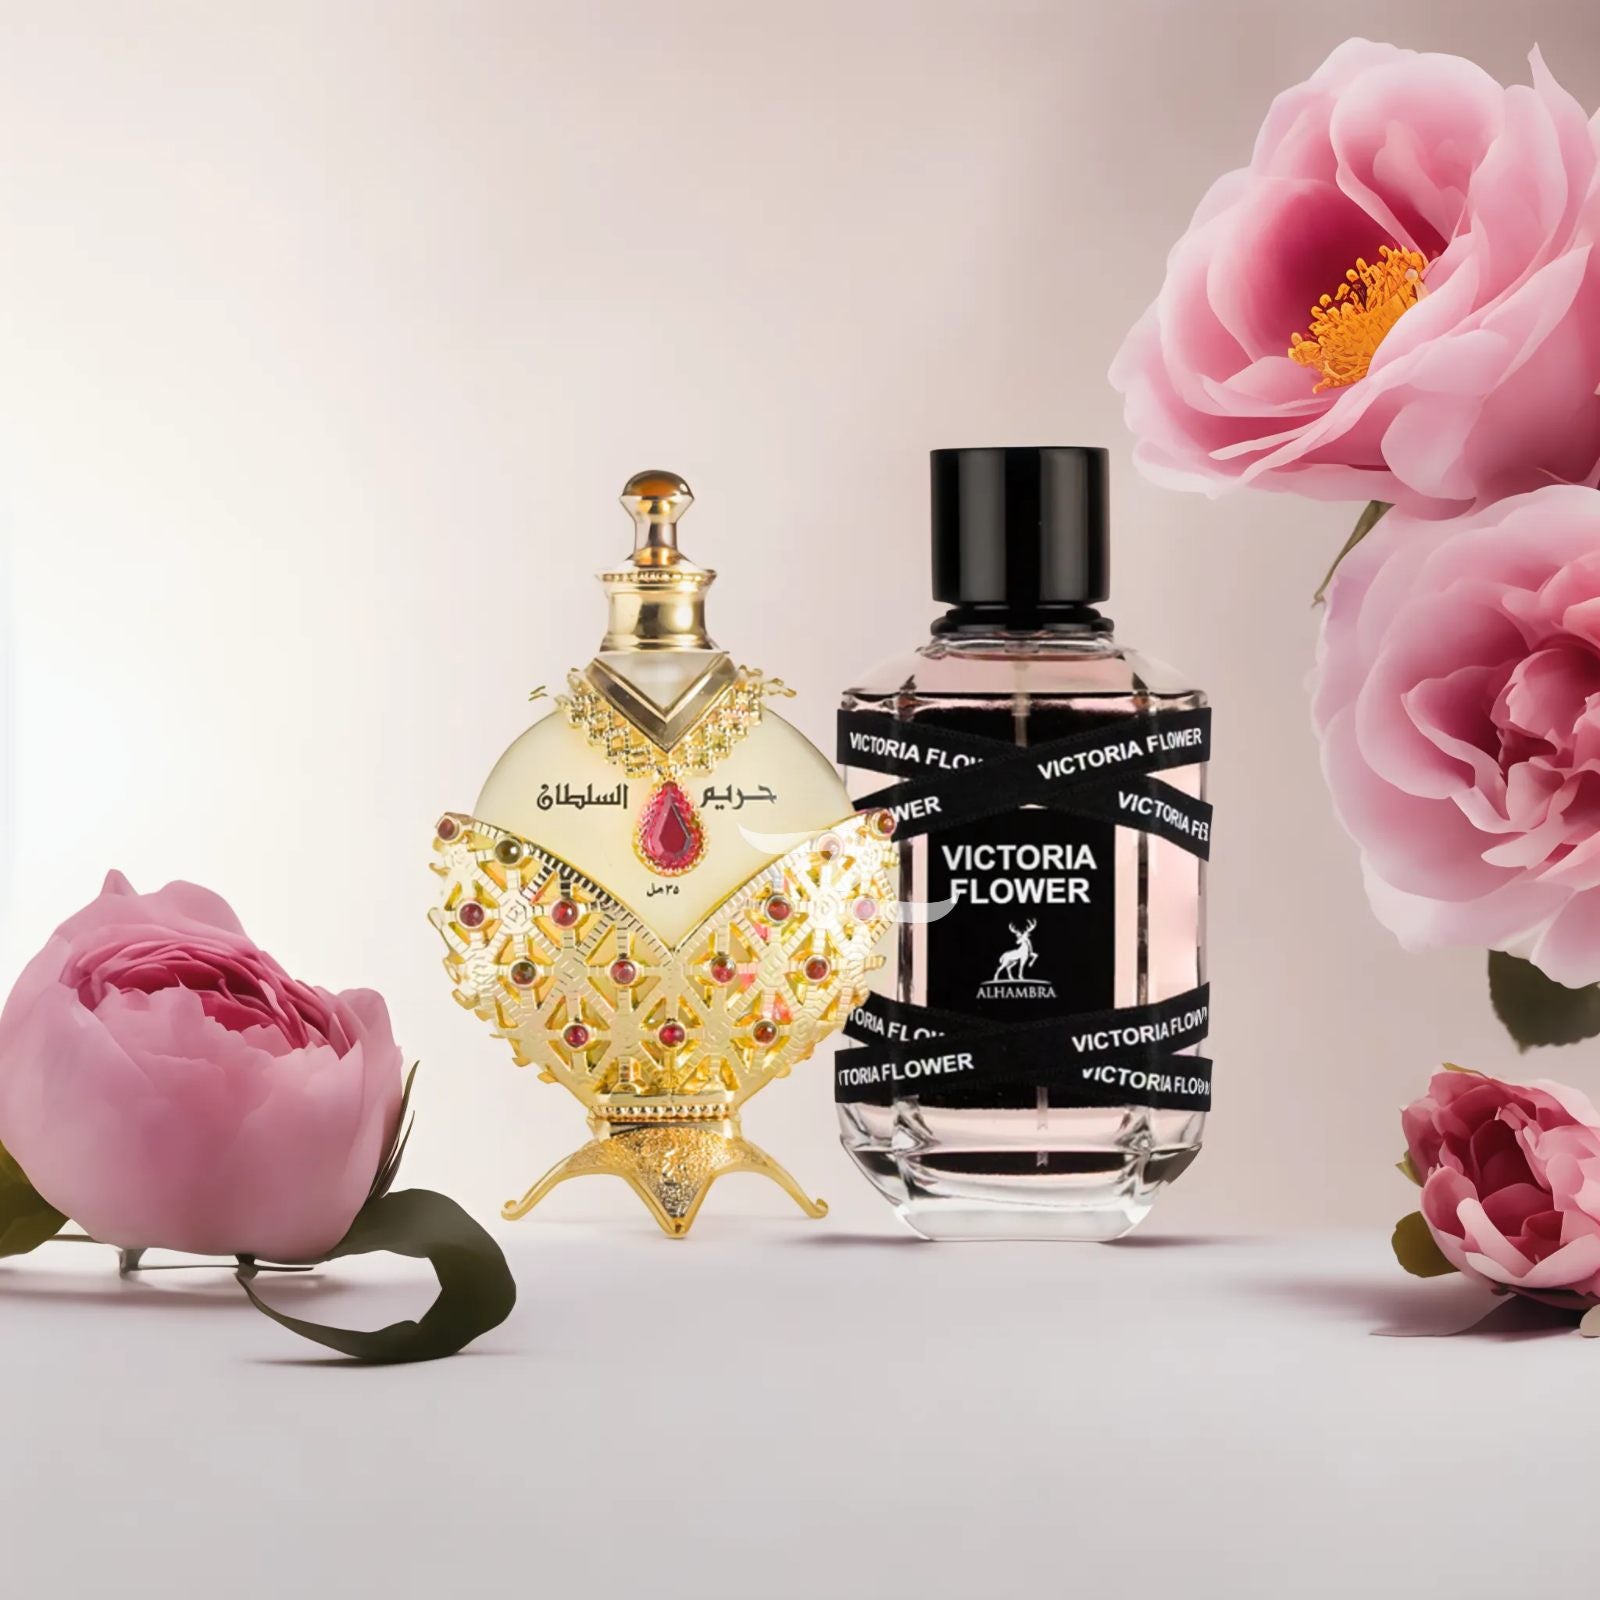 Hareem Al Sultan Gold + Victoria Flower Combo by Khadlaj Perfumes